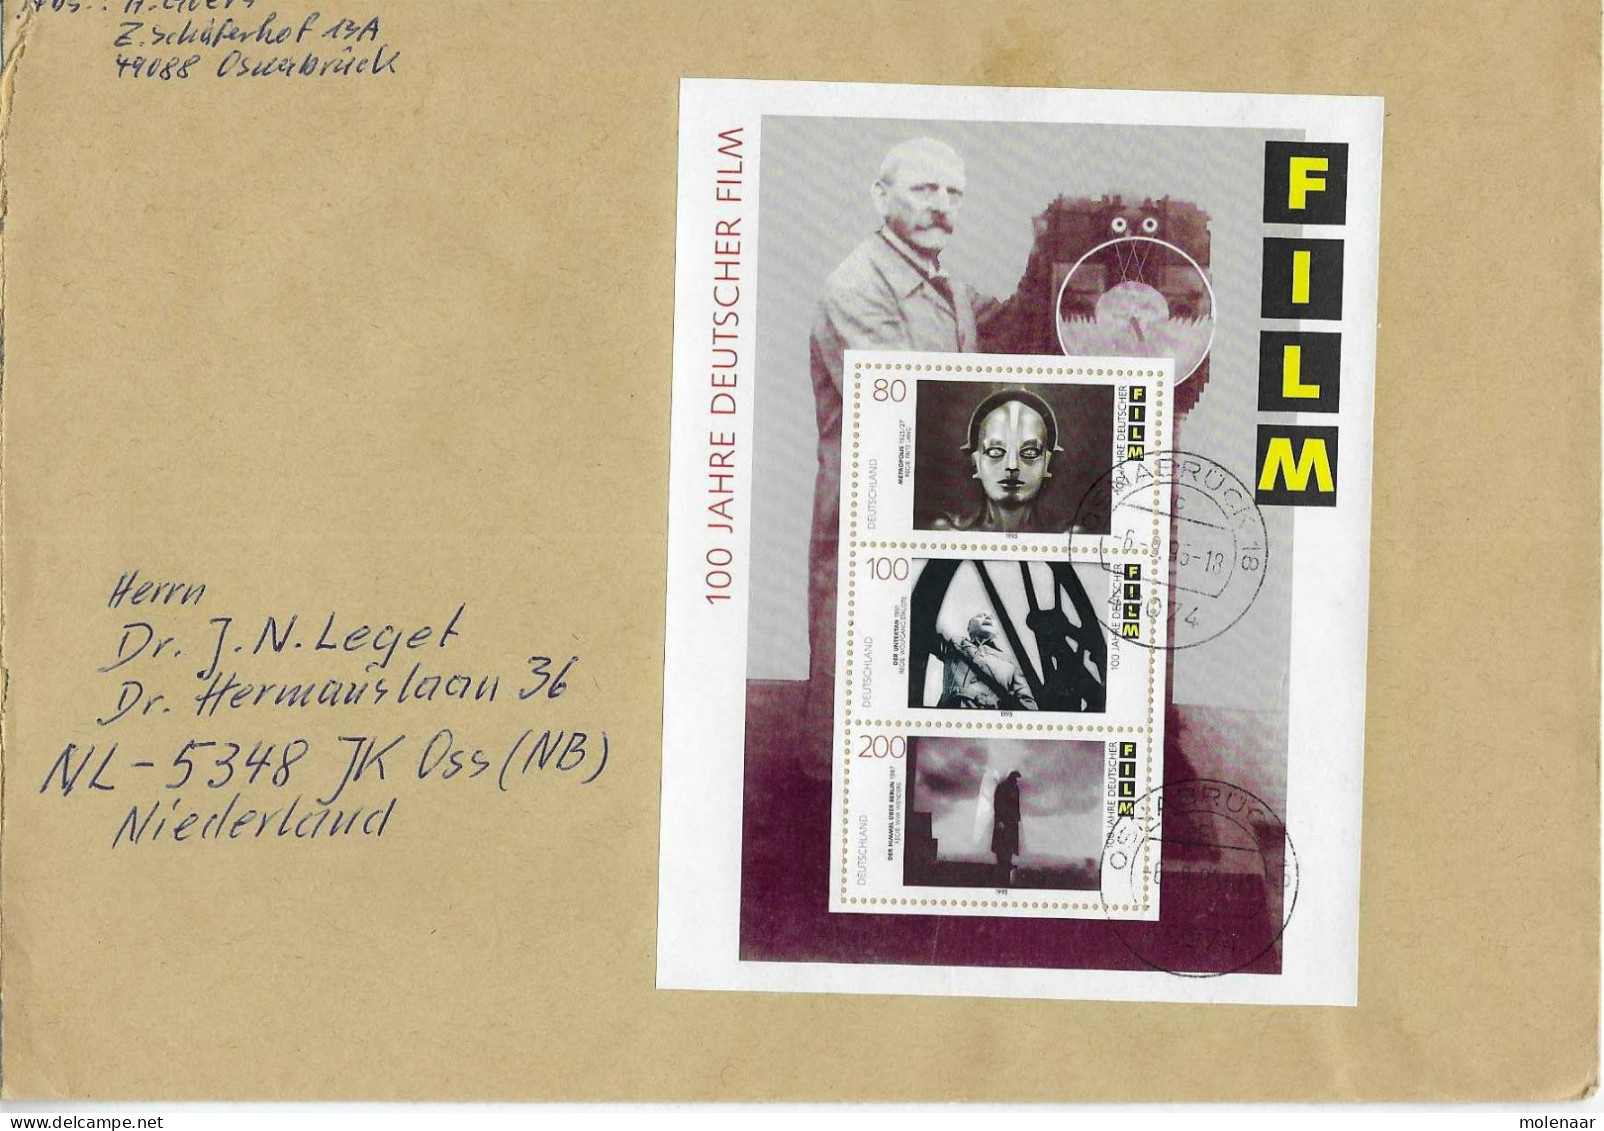 Postzegels > Europa > Duitsland > West-Duitsland > 1990-1999 >brief Met Blok 45 (17175) - Covers & Documents